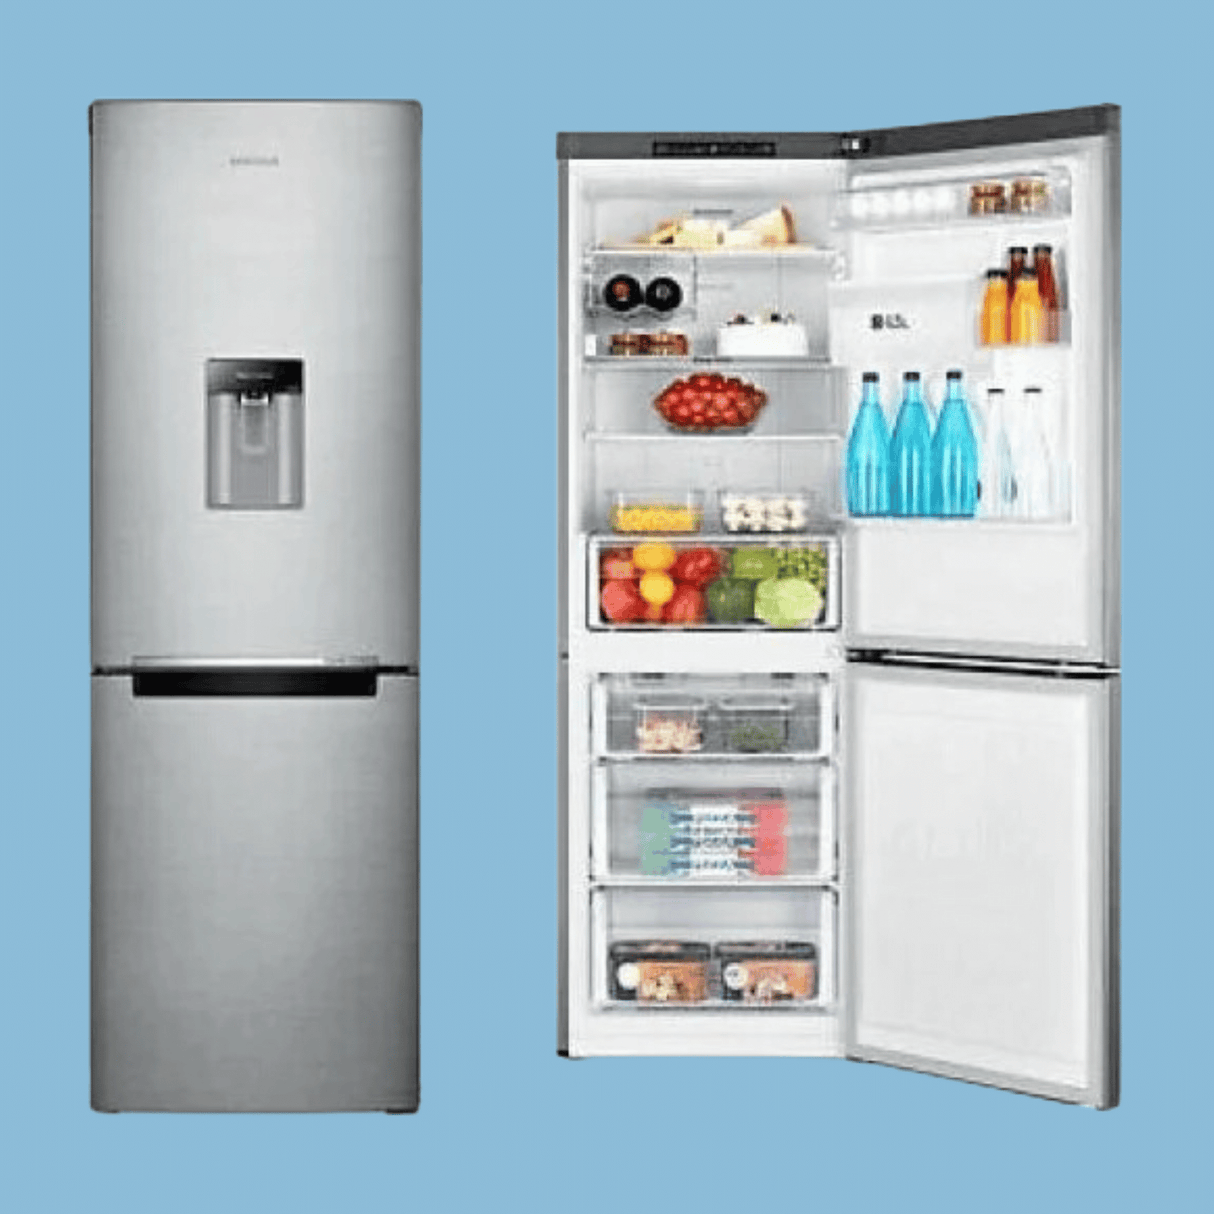 Hisense 341L Fridge, Double Door Defrost Refrigerator With Water Dispenser RB341D4WGU– Silver